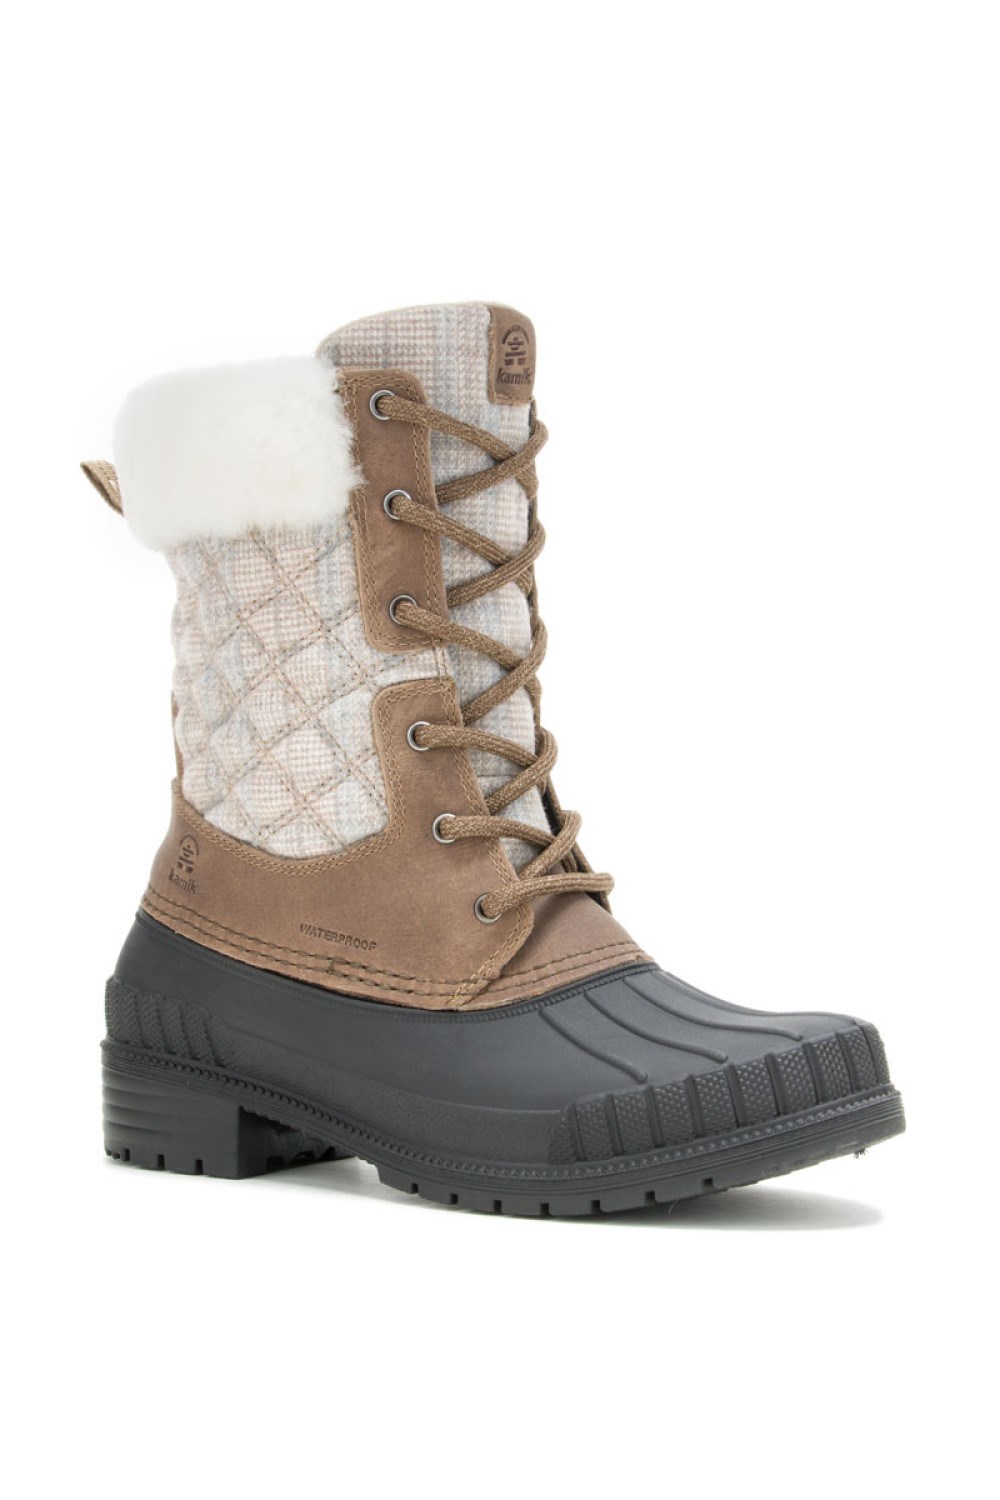 SiennaCuf2 Womens Waterproof Winter Boots -